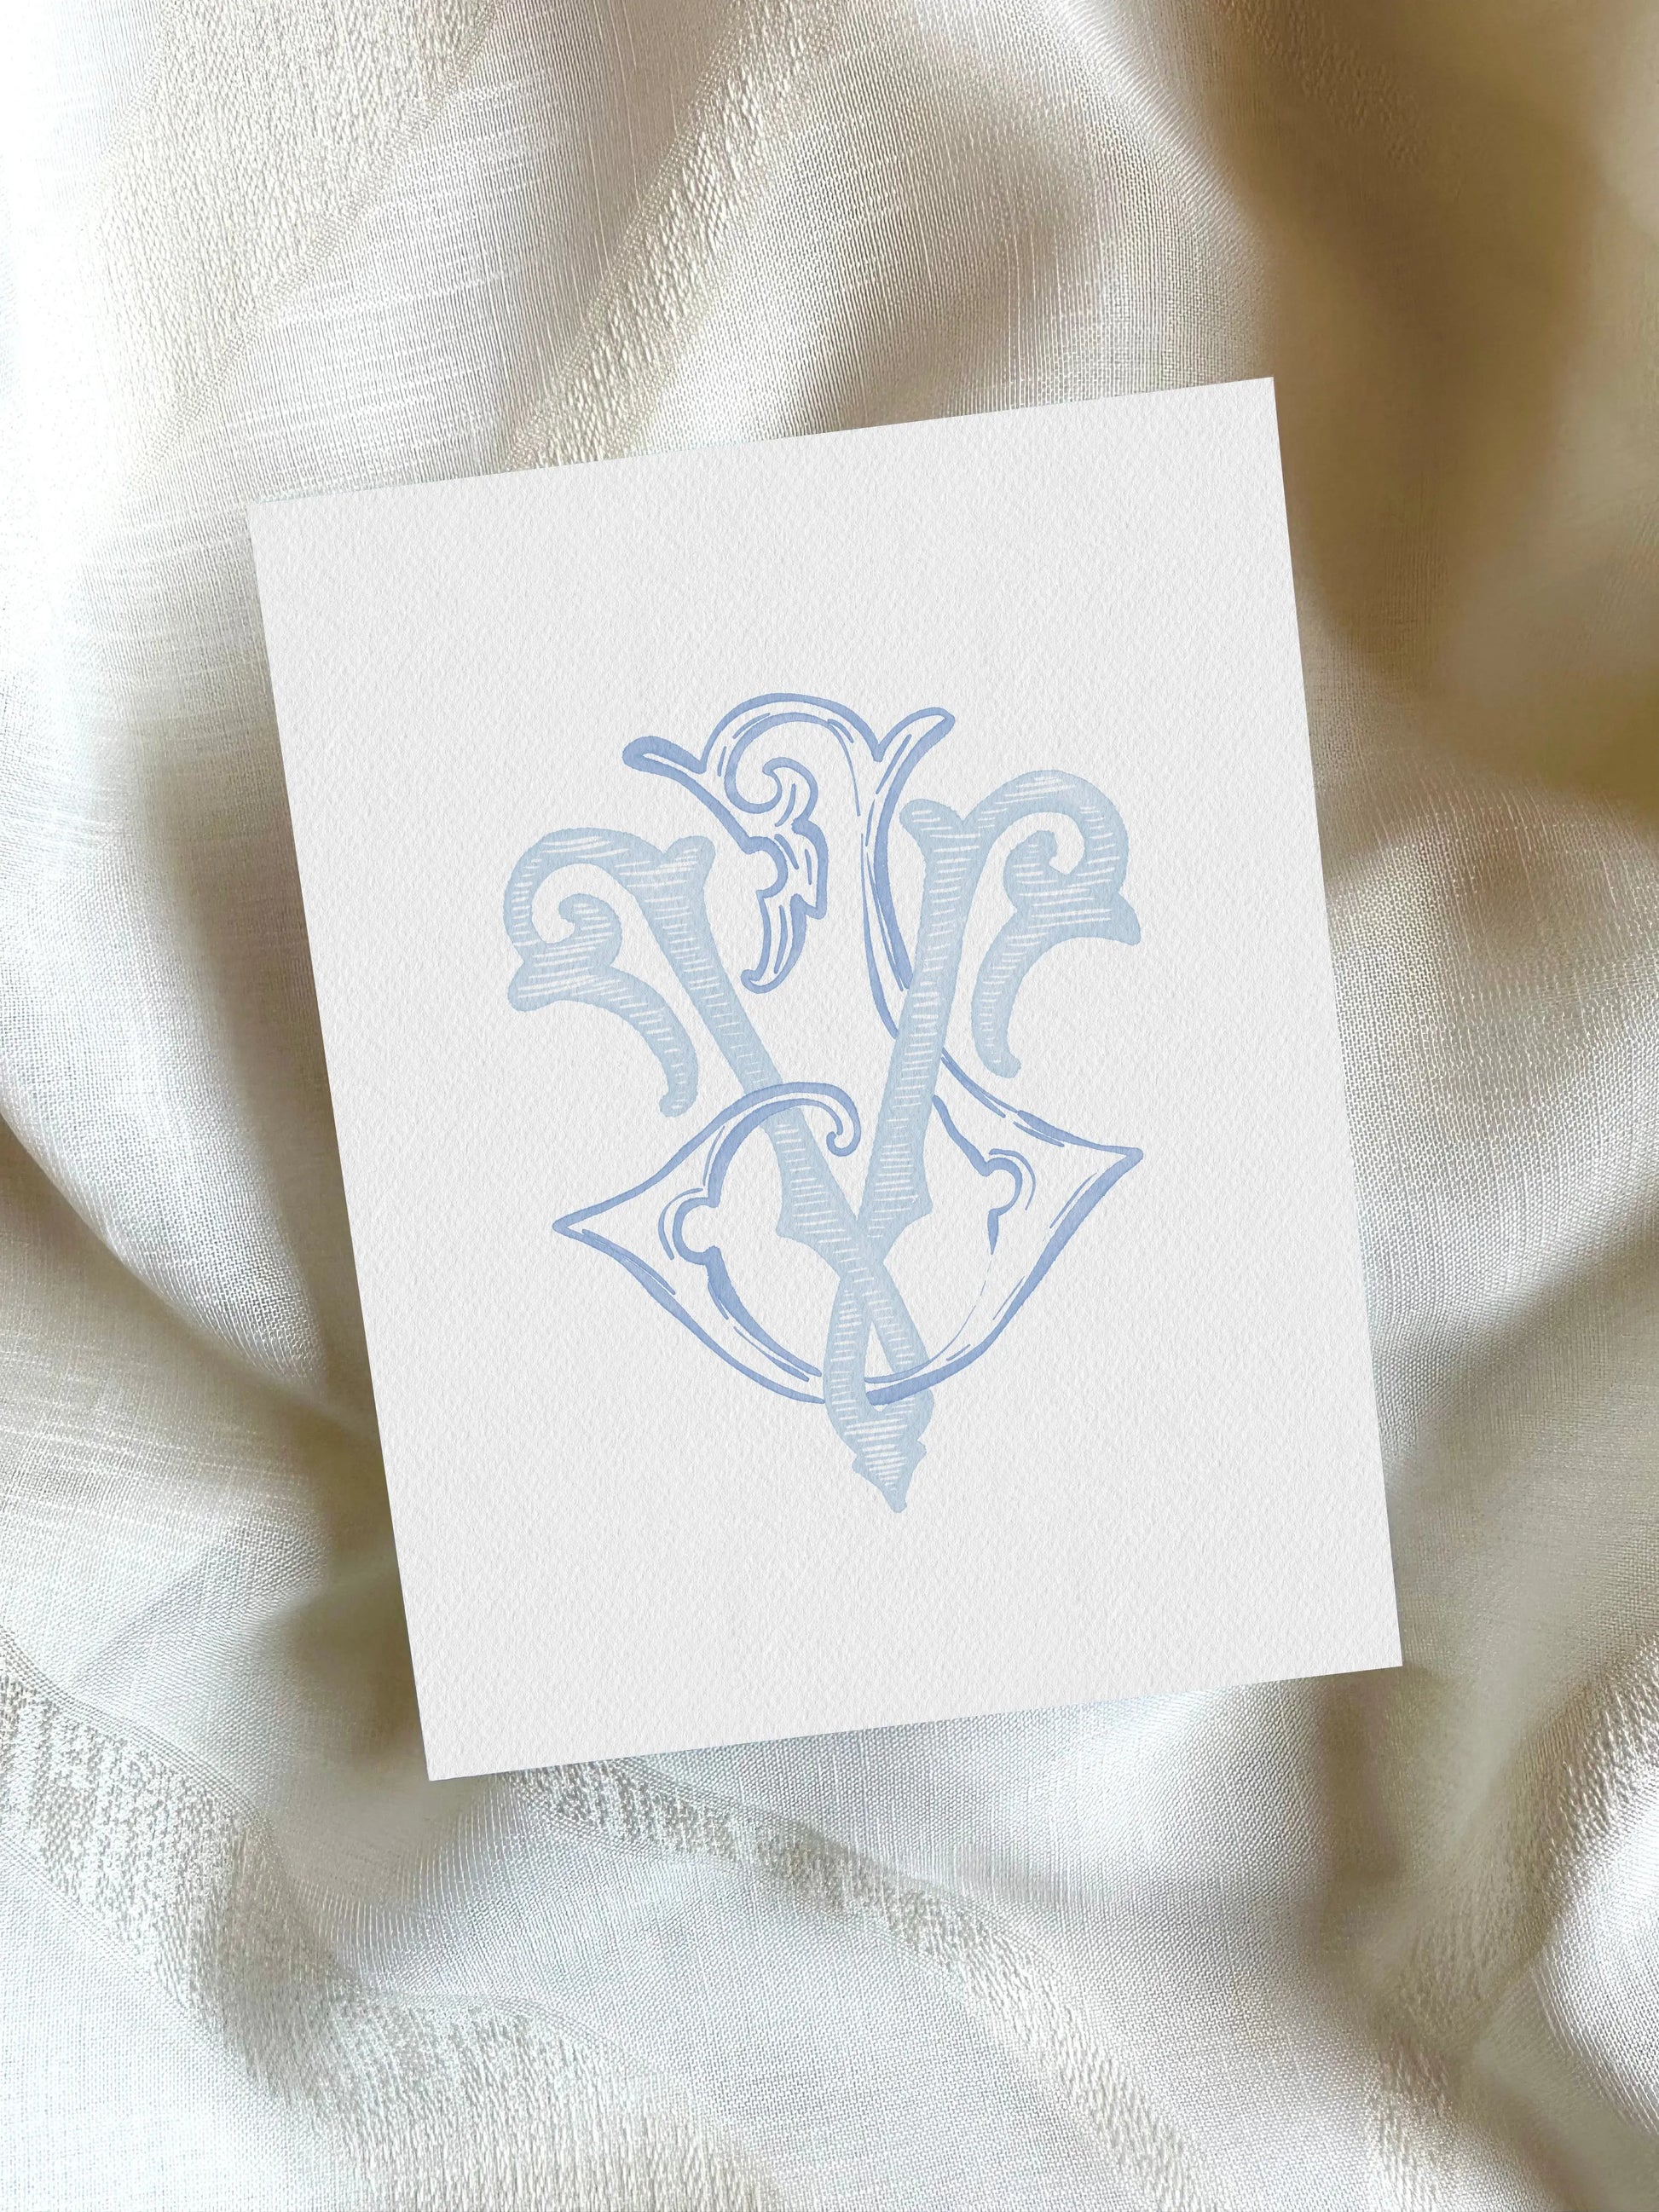 2 Letter Monogram with Letters VJ | Digital Download - Wedding Monogram SVG, Personal Logo, Wedding Logo for Wedding Invitations The Wedding Crest Lab